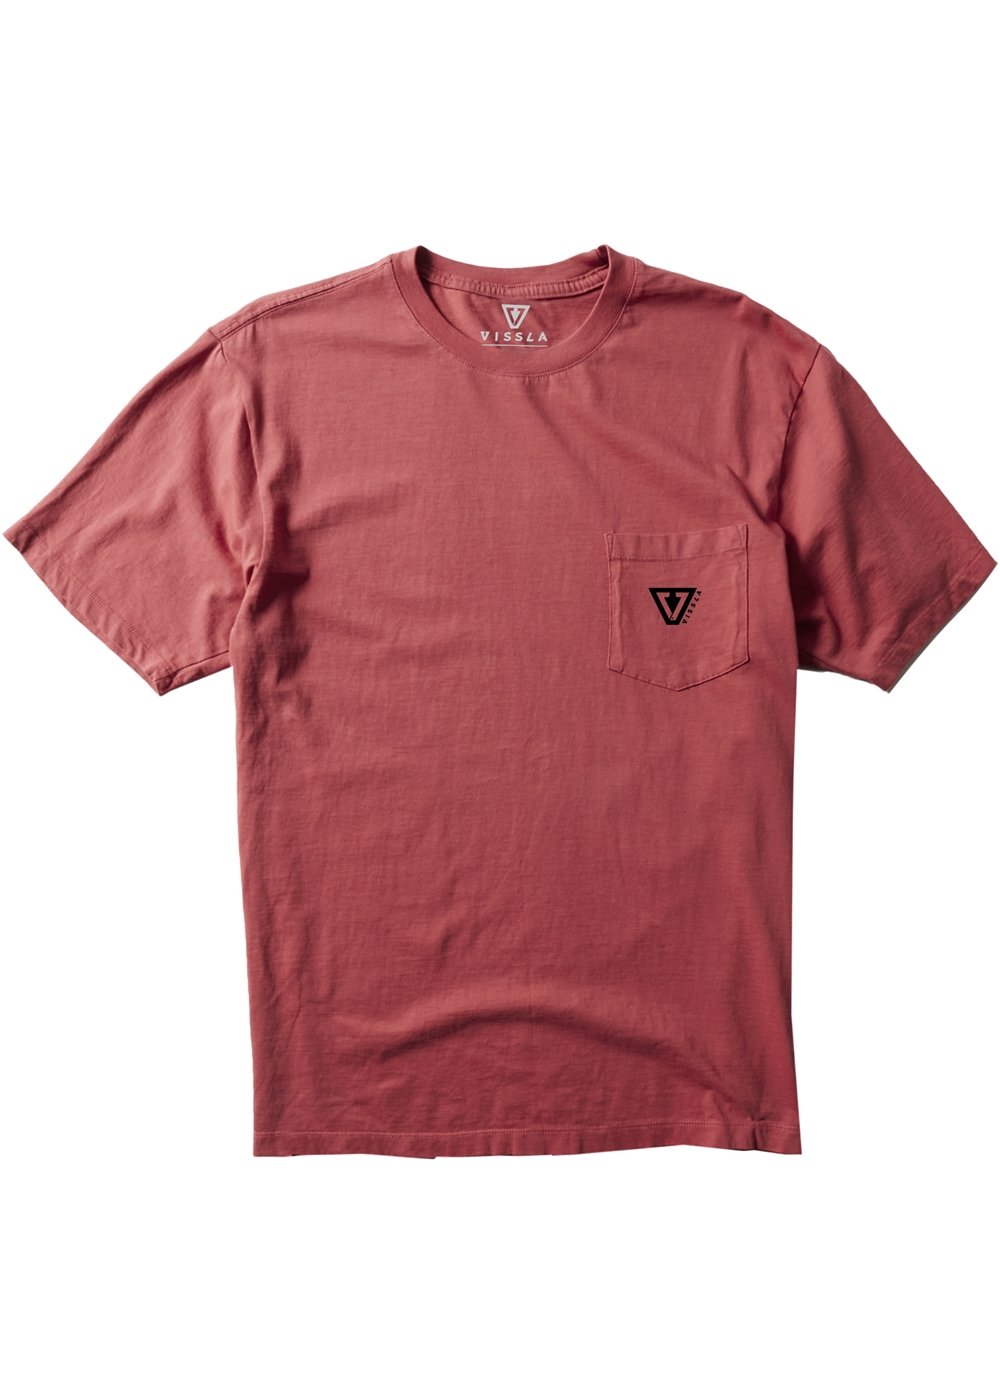 Vissla Men's brick colored short sleeve t-shirt with black Vissla logo on the chest pocket